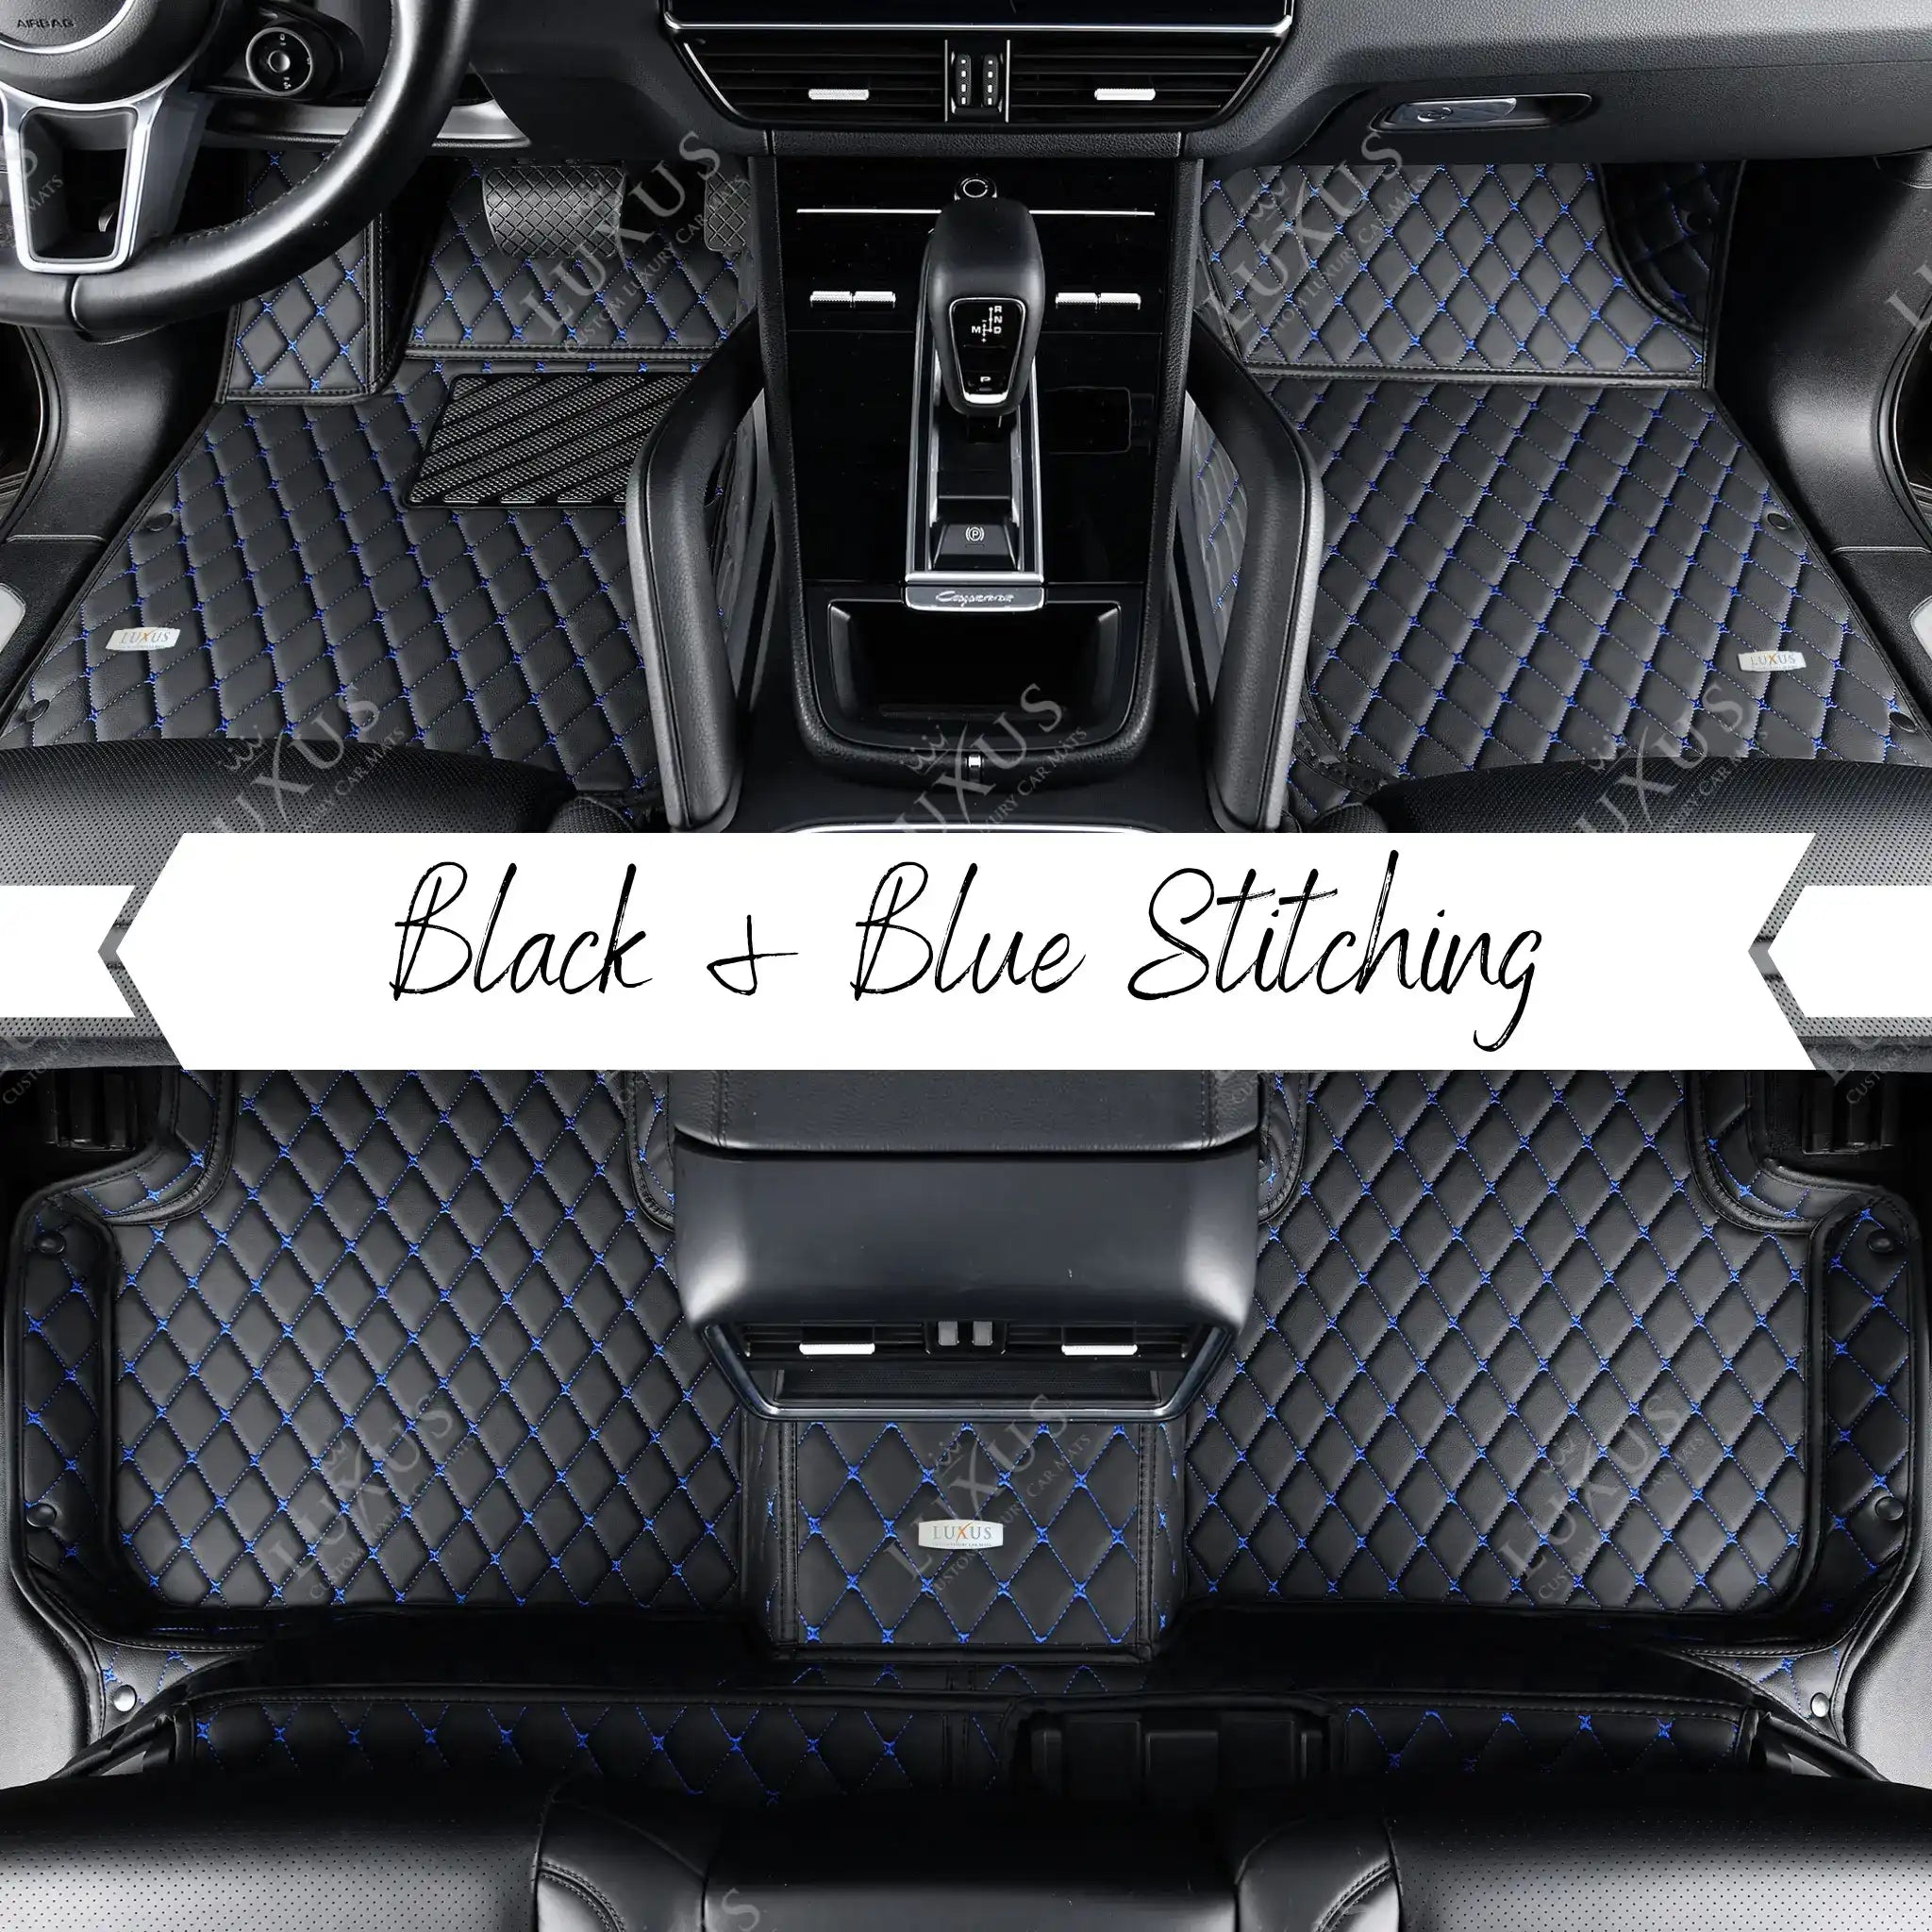  Car Floor Mats Auto Auto Interior Accessories Leather Carpets  Rugs Foot Pads (Color : Black Blue) : Automotive